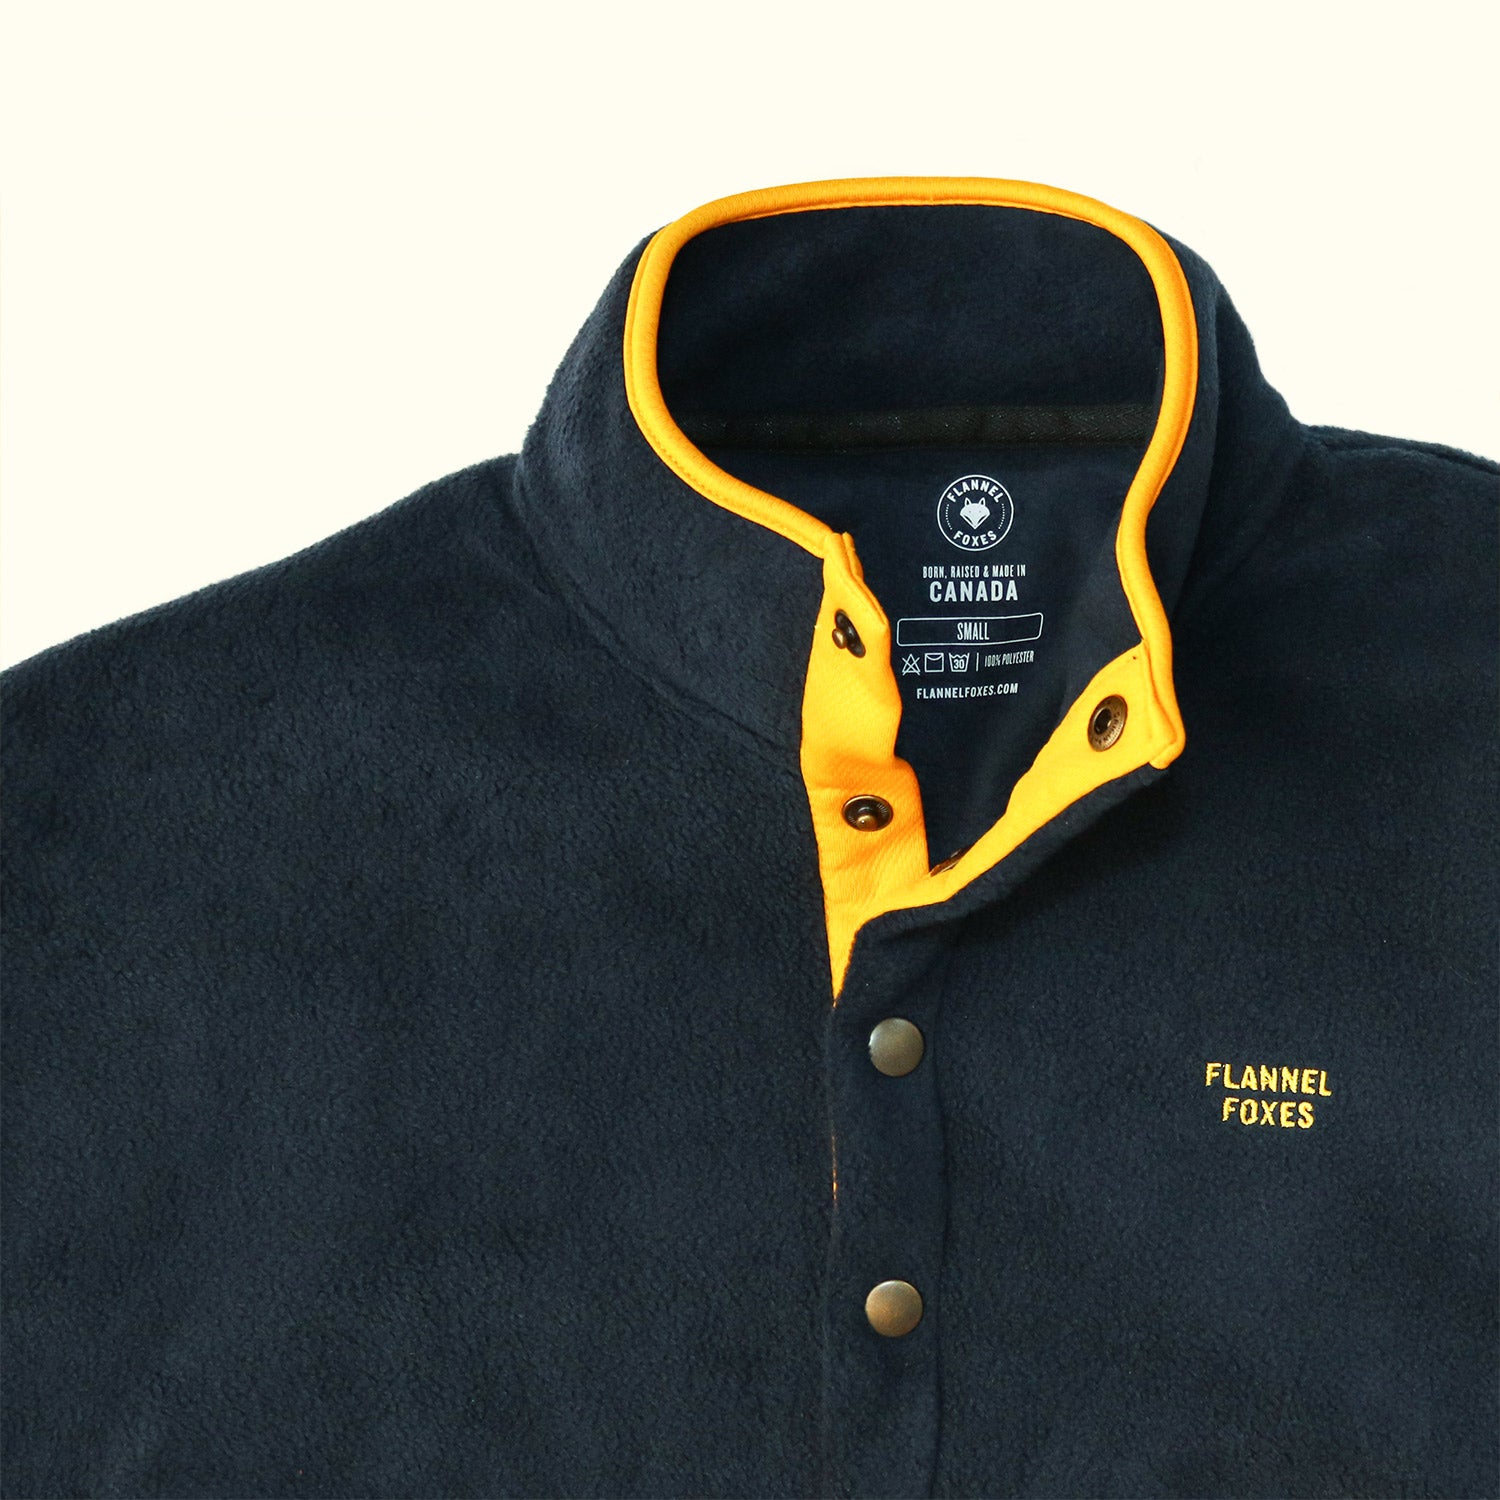 Fleece Jacket – Mustard & Navy